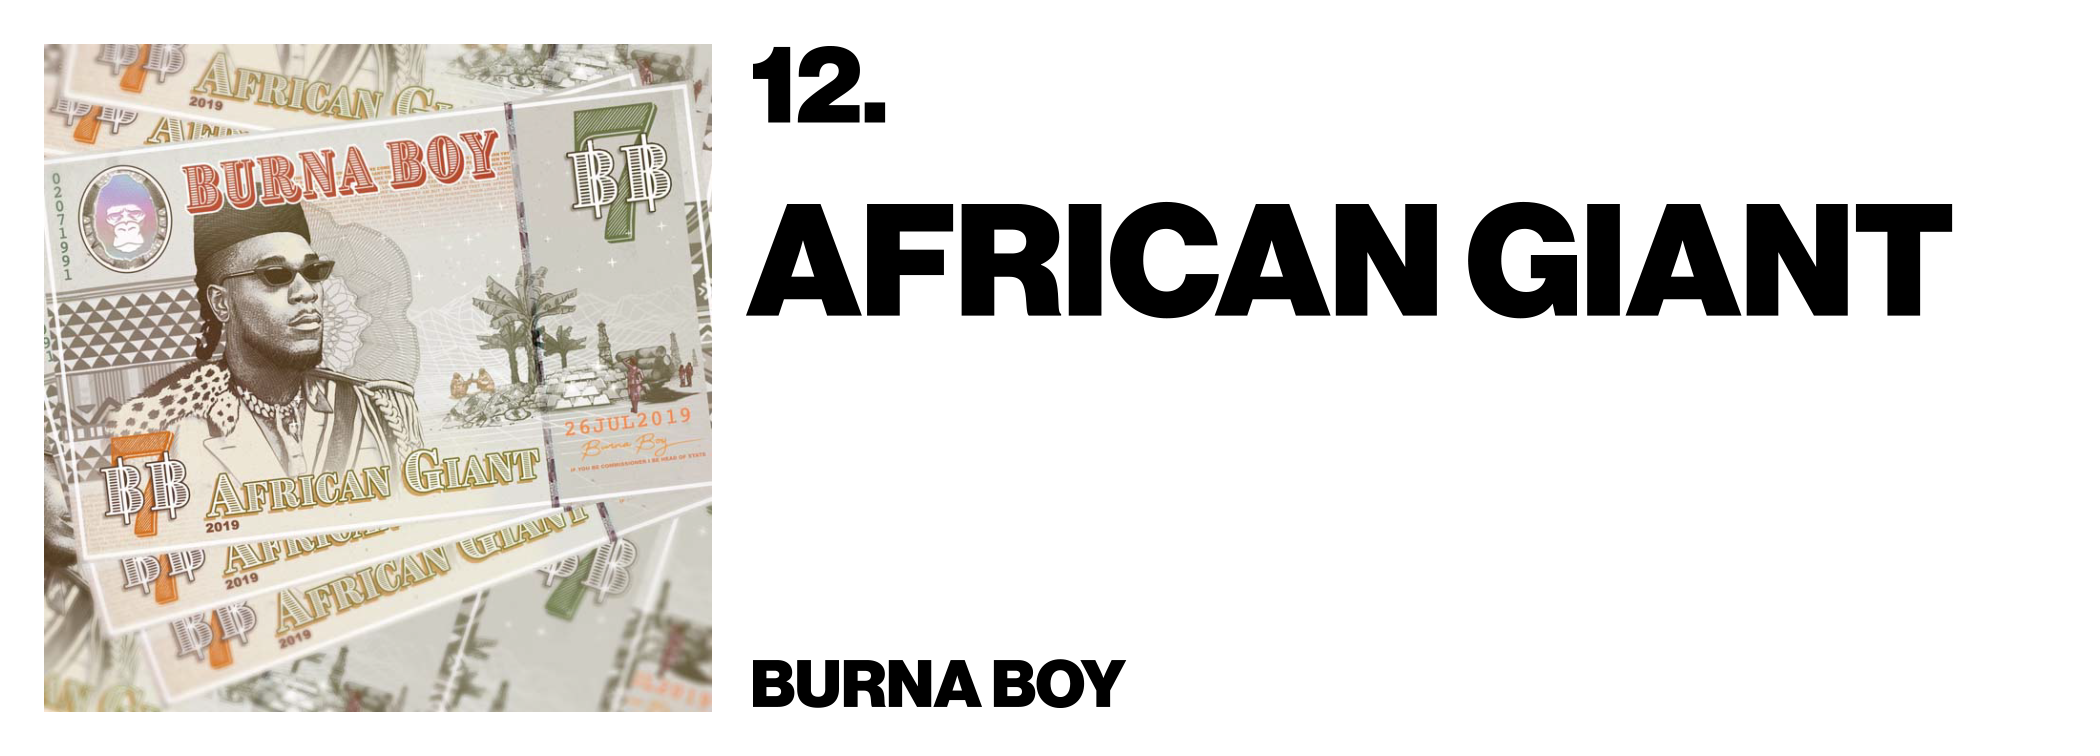 1576015057947-12-Burna-Boy-African-Giant